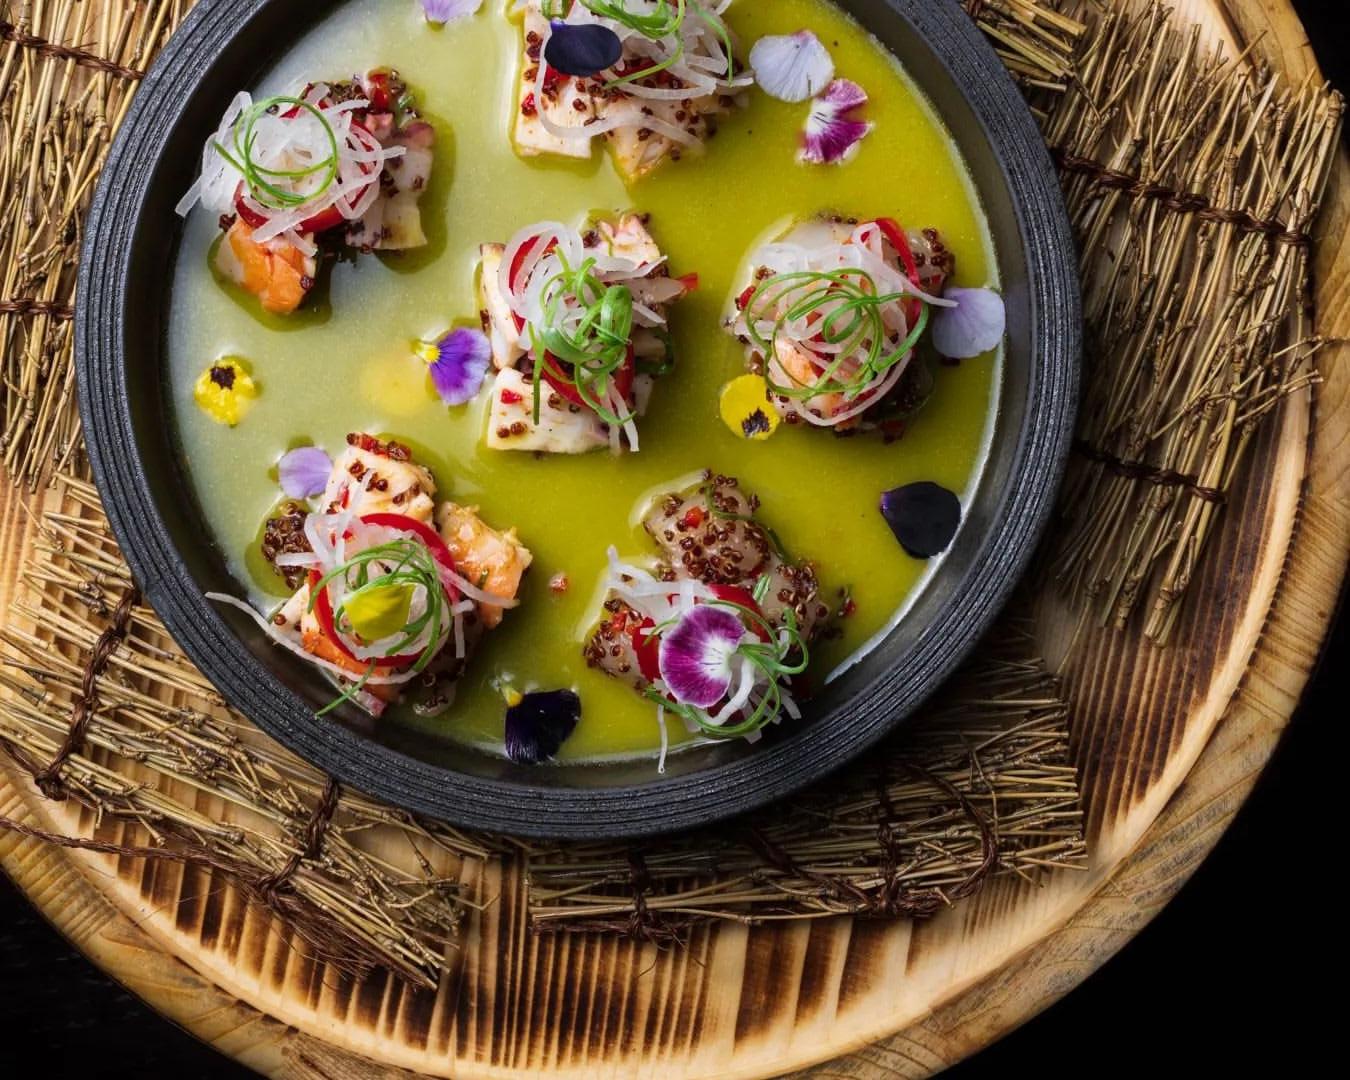 Kuuru Riyadh Review: Homegrown favourite brings Nikkei cuisine to the Saudi table